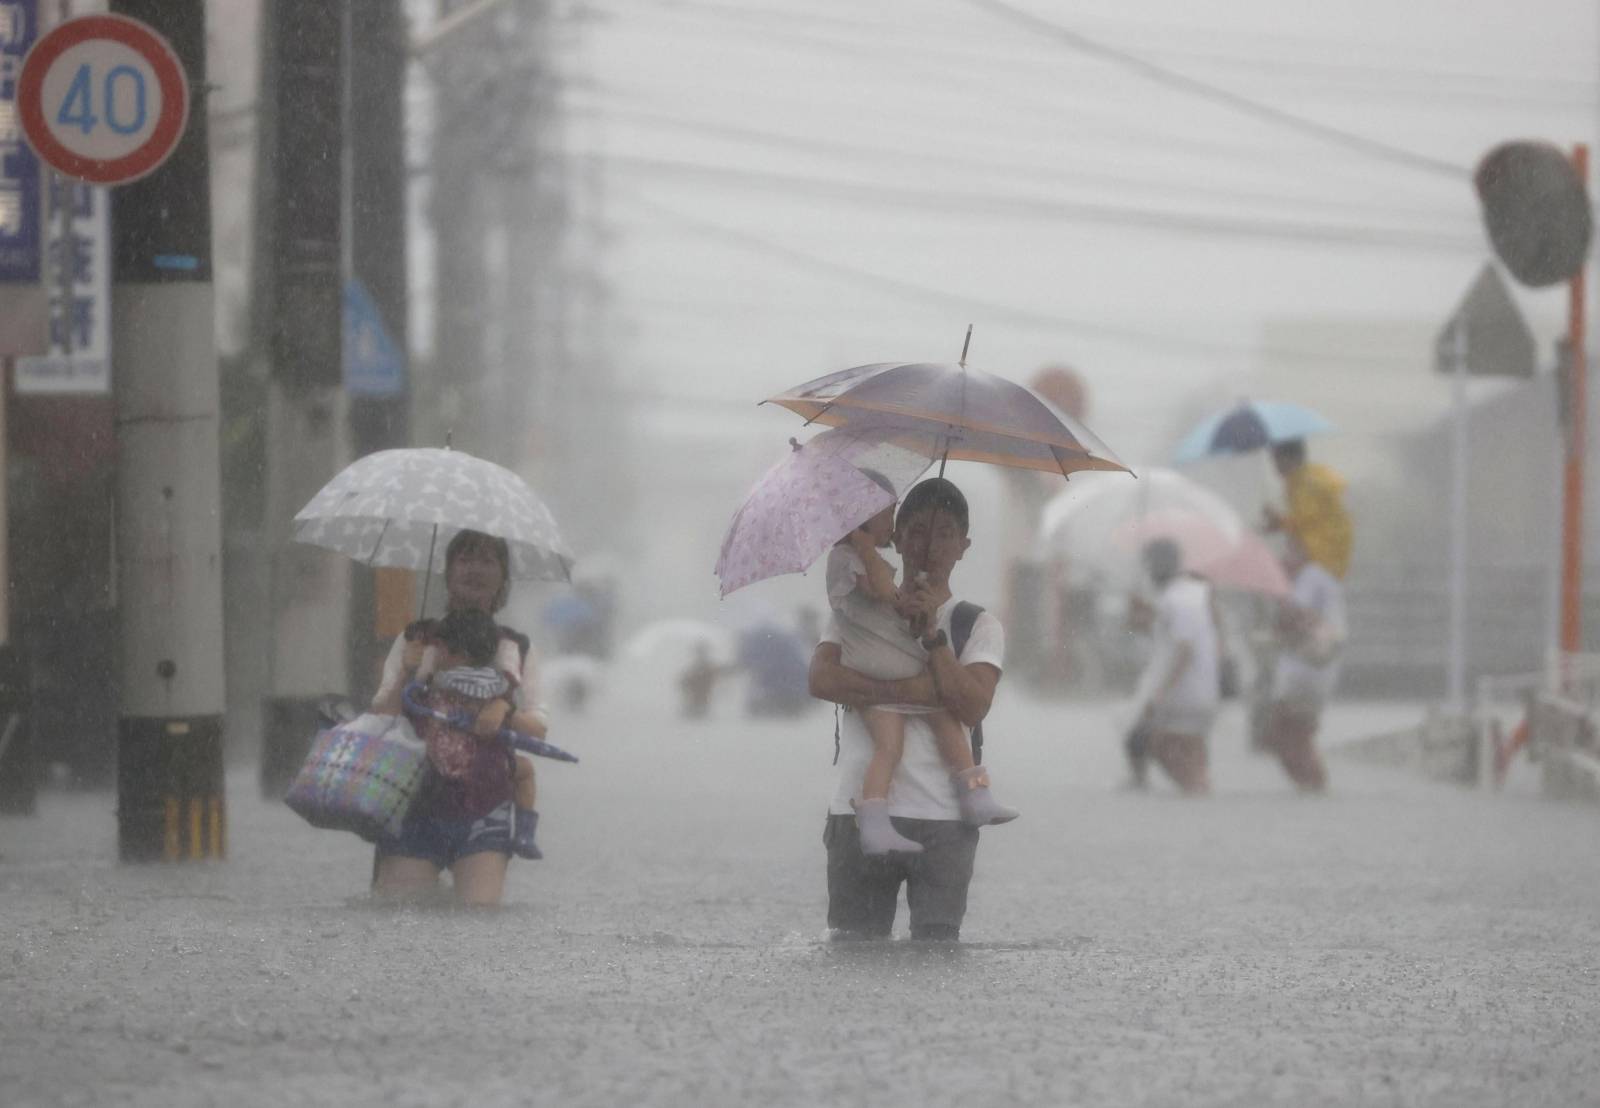 Local residents walk in a road flooded by heavy rain in Kurume, Japan